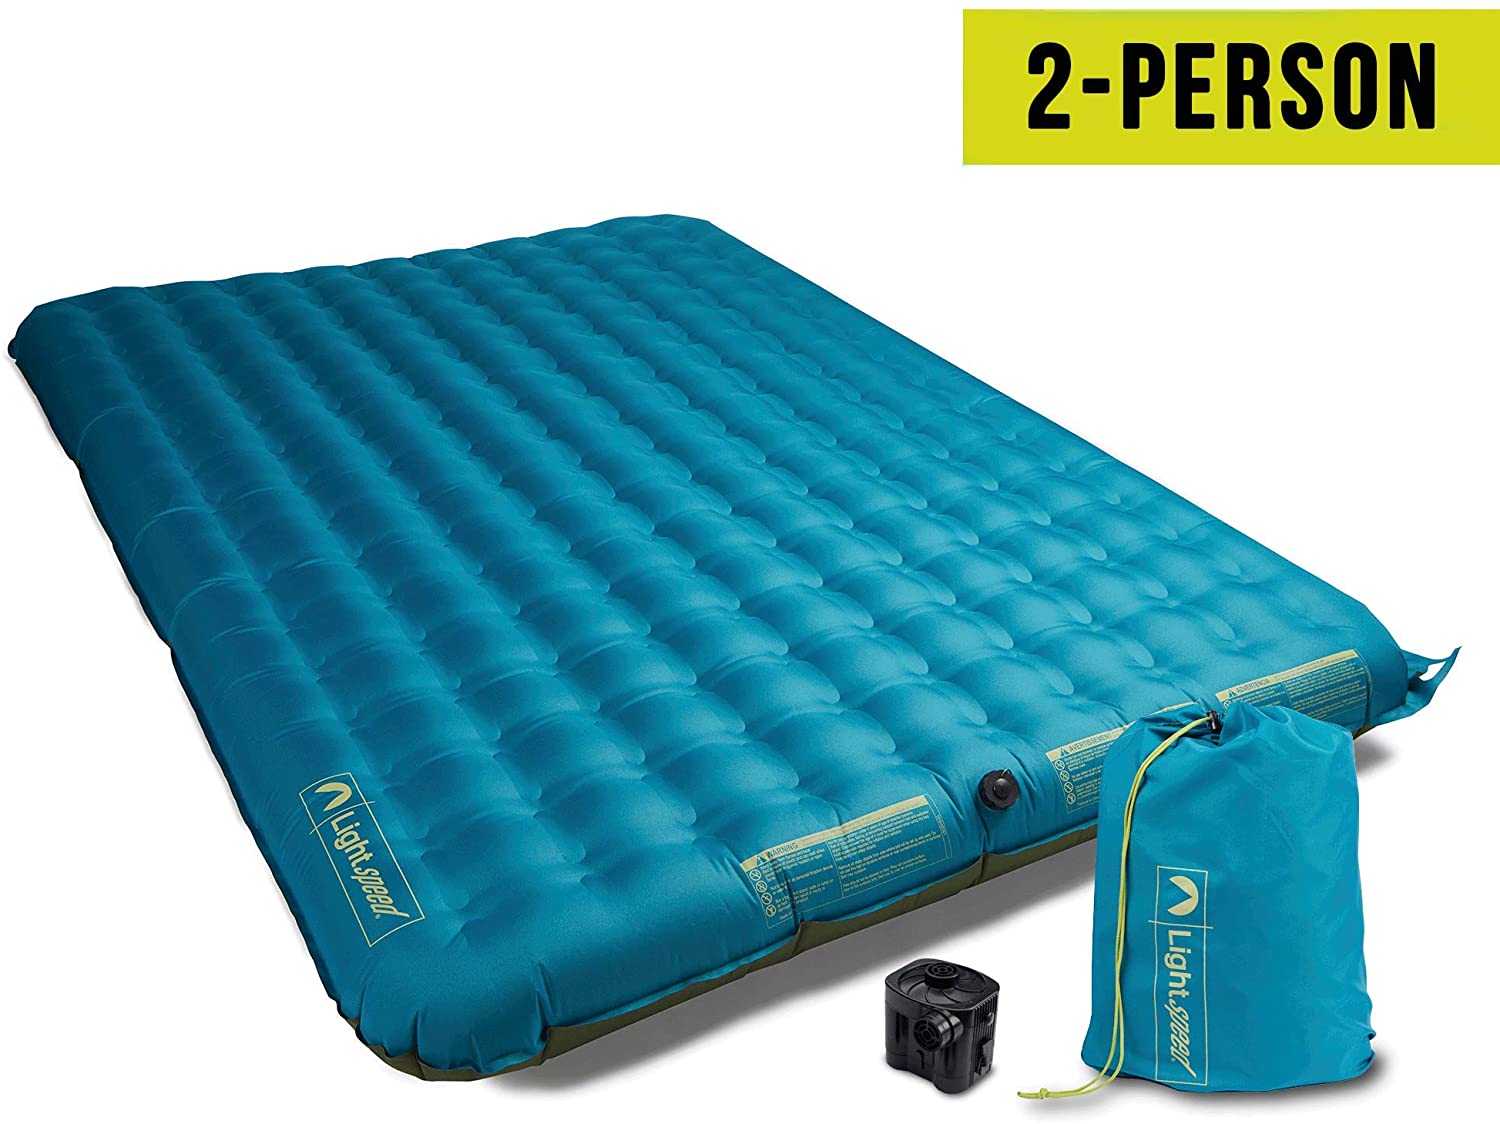 twin xl air mattress with built-in pump